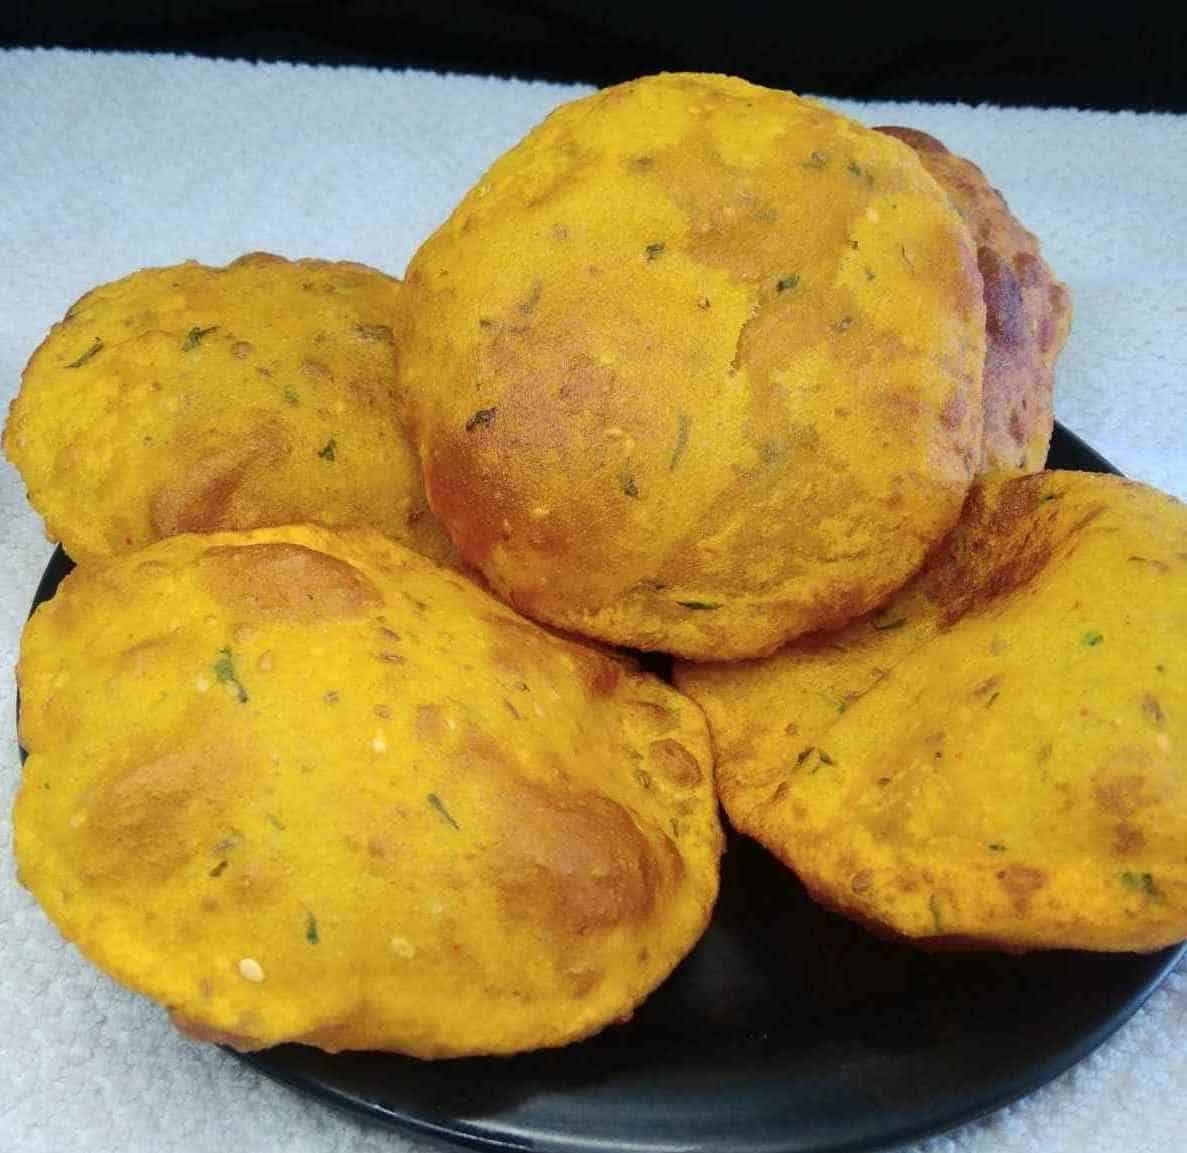 Aloo Puri Recipe | Aloo Ki Poori